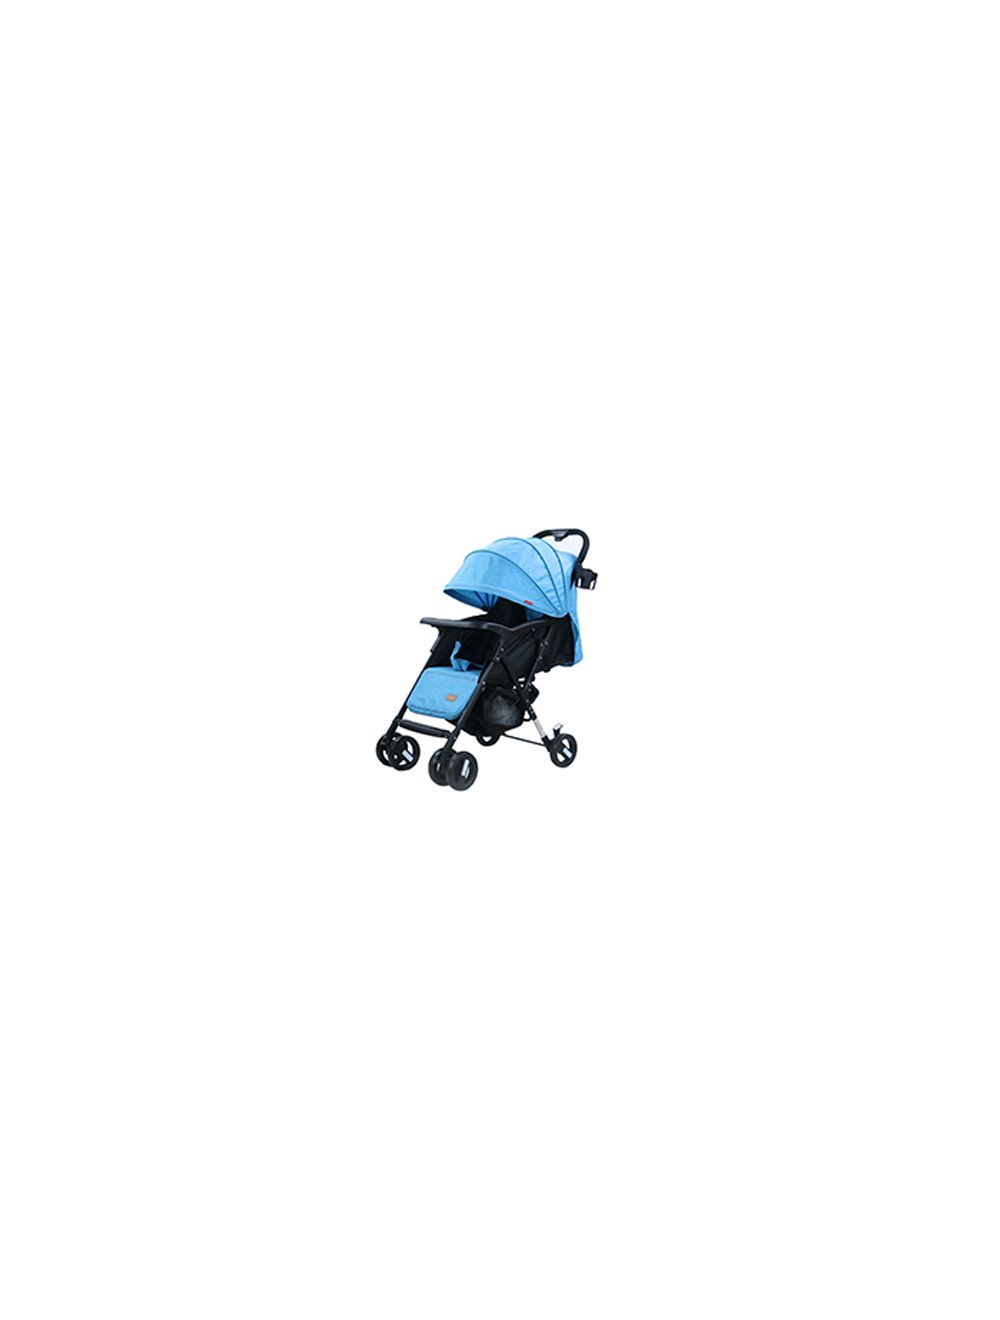 Joymaker Baby Blue & Black Stroller